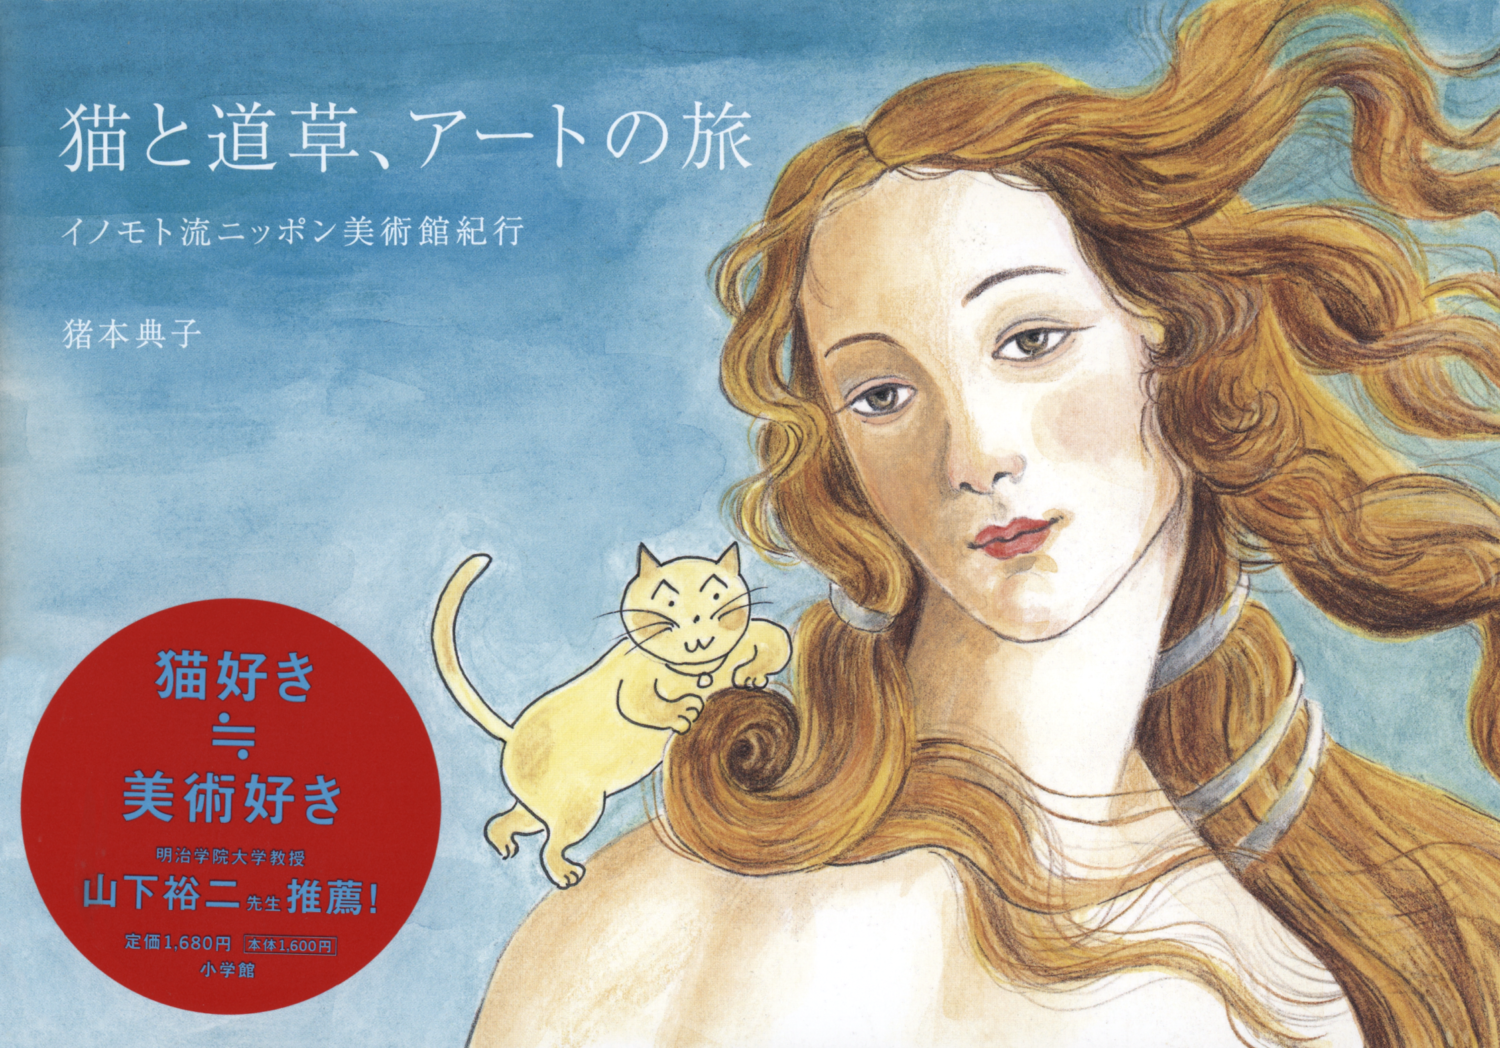 Cats art journey, Museum guide猫道草と,ア-トの旅